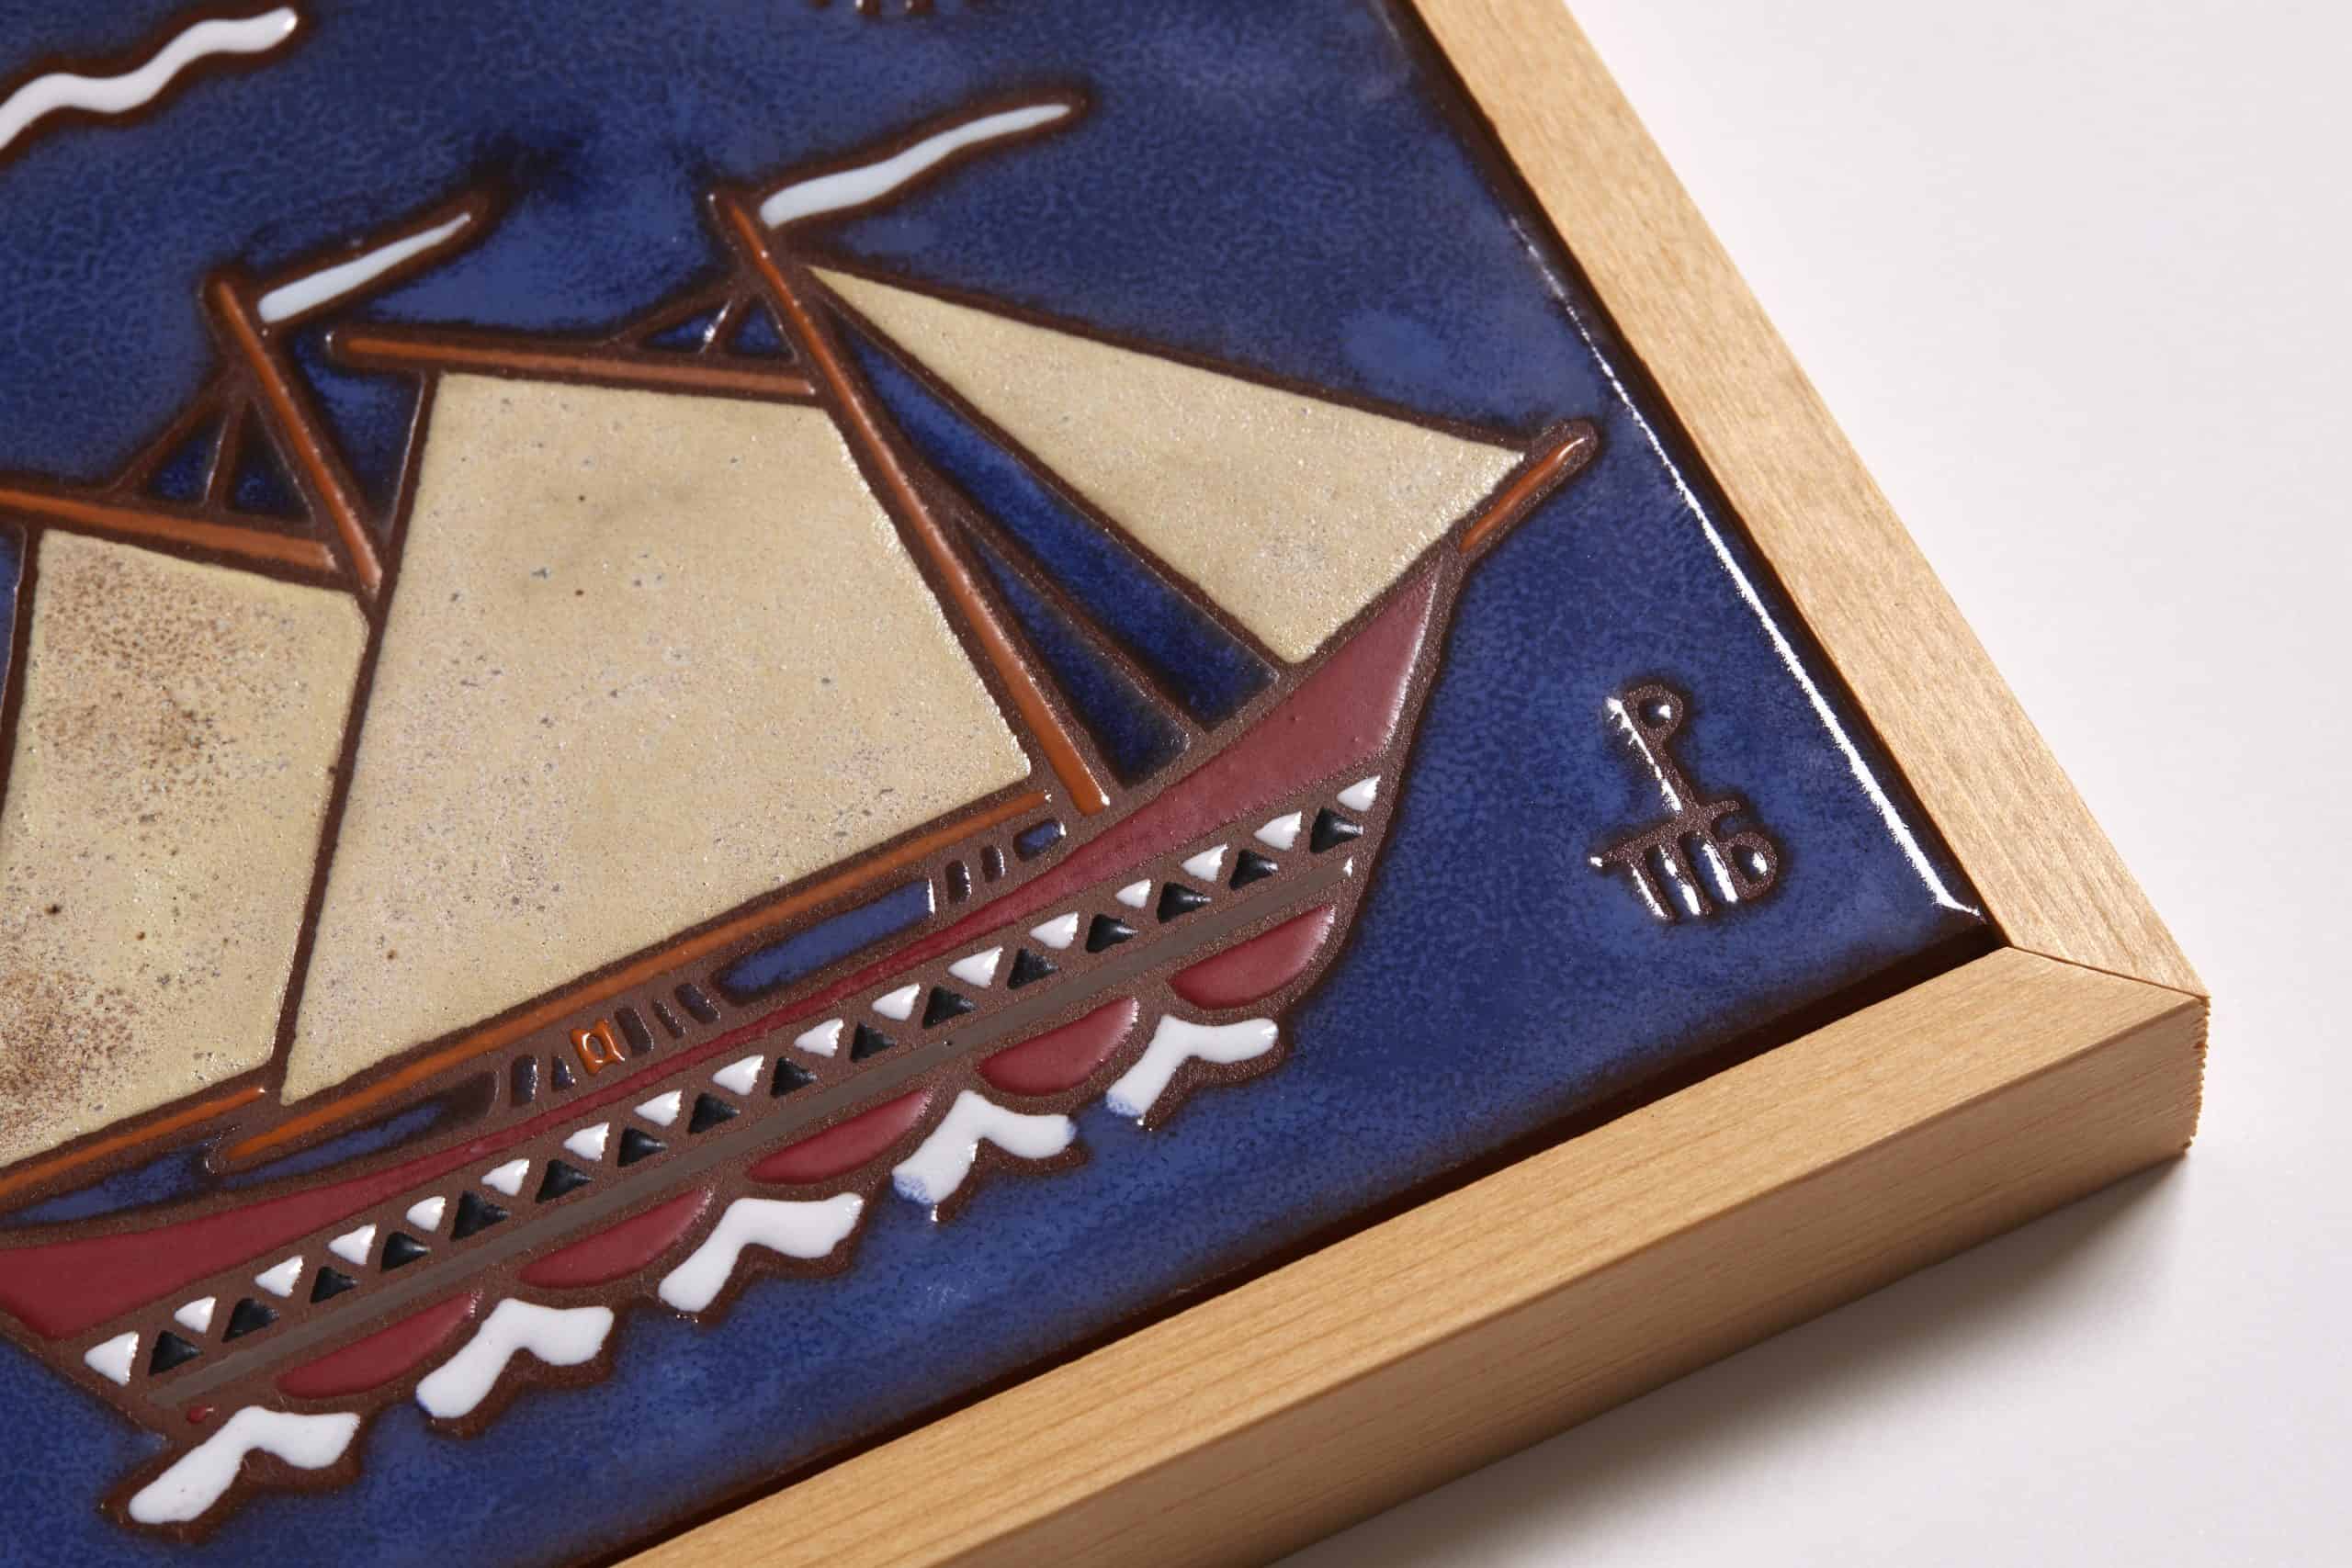 Ceramic Tile with Frame – Boat